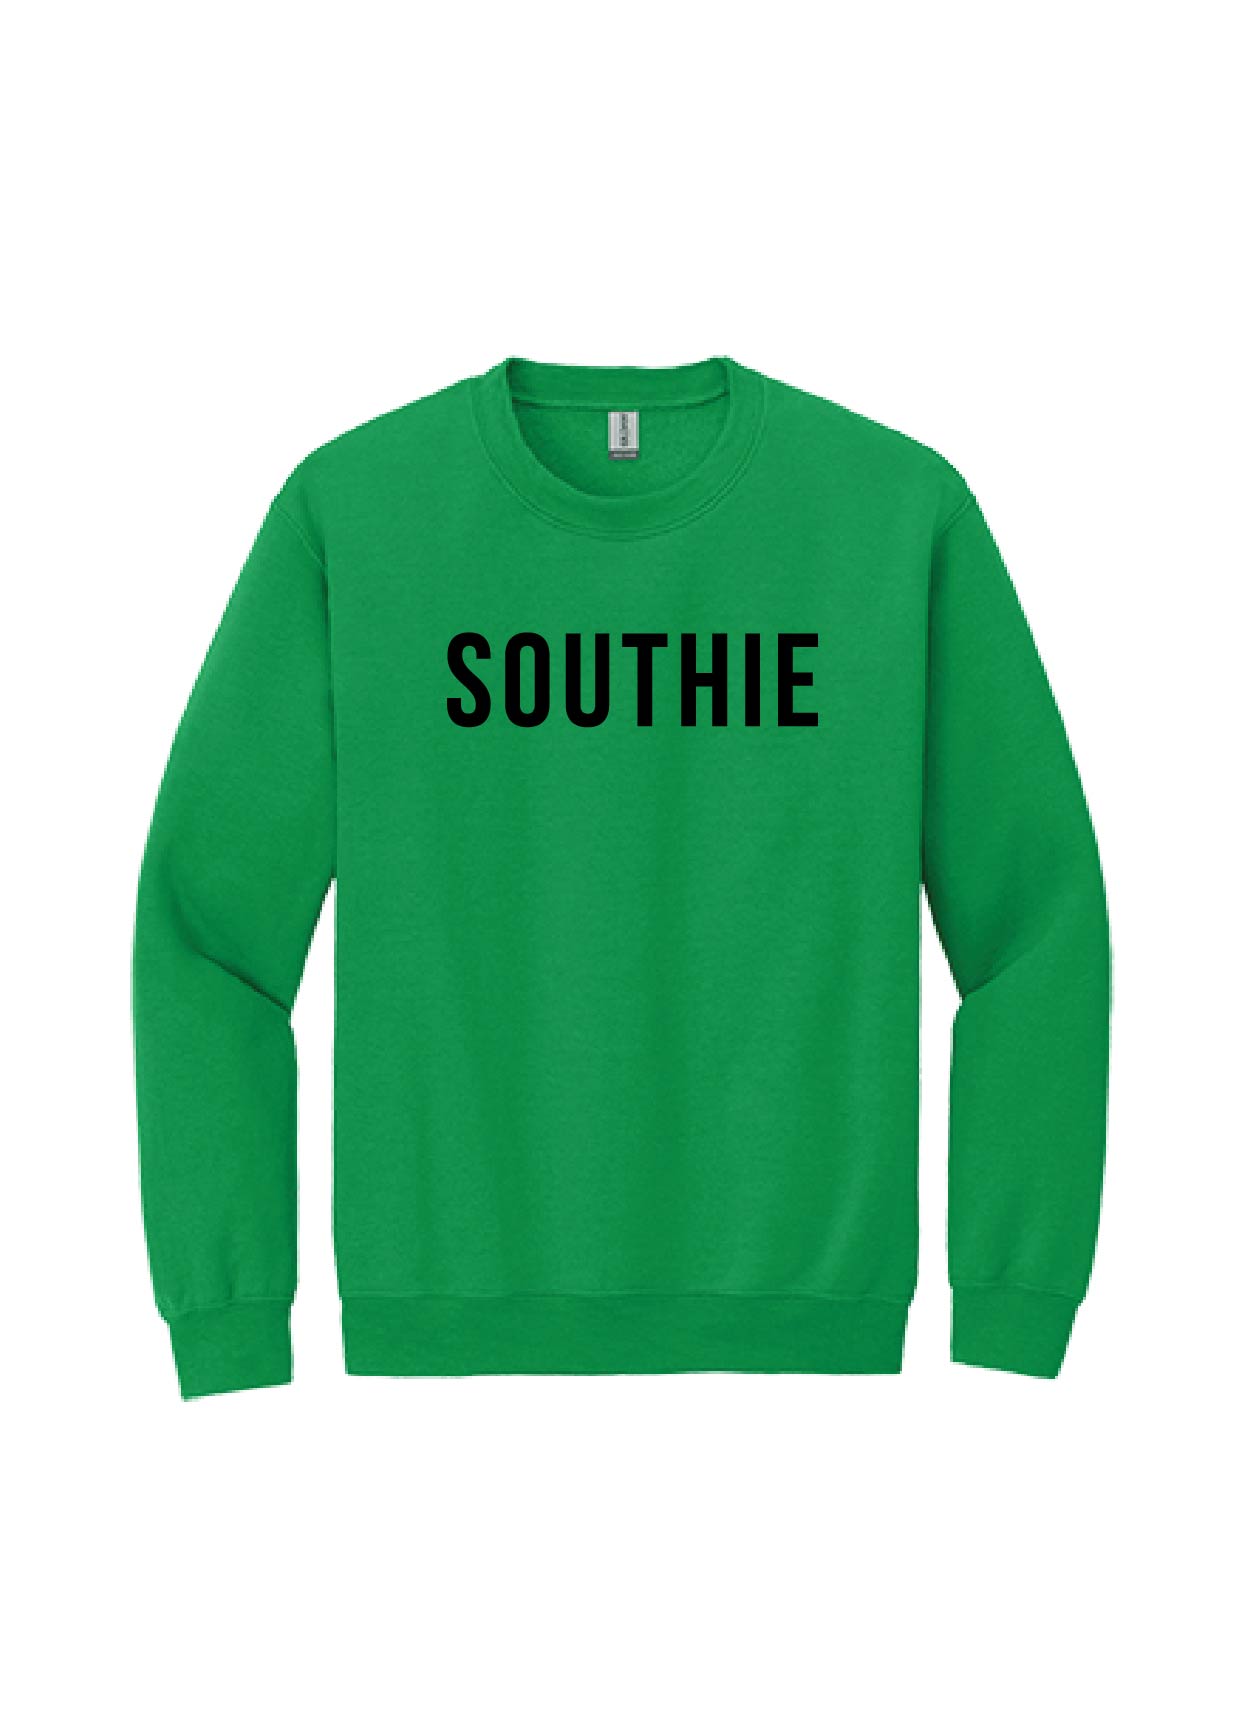 SOUTHIE Crewneck Sweatshirt